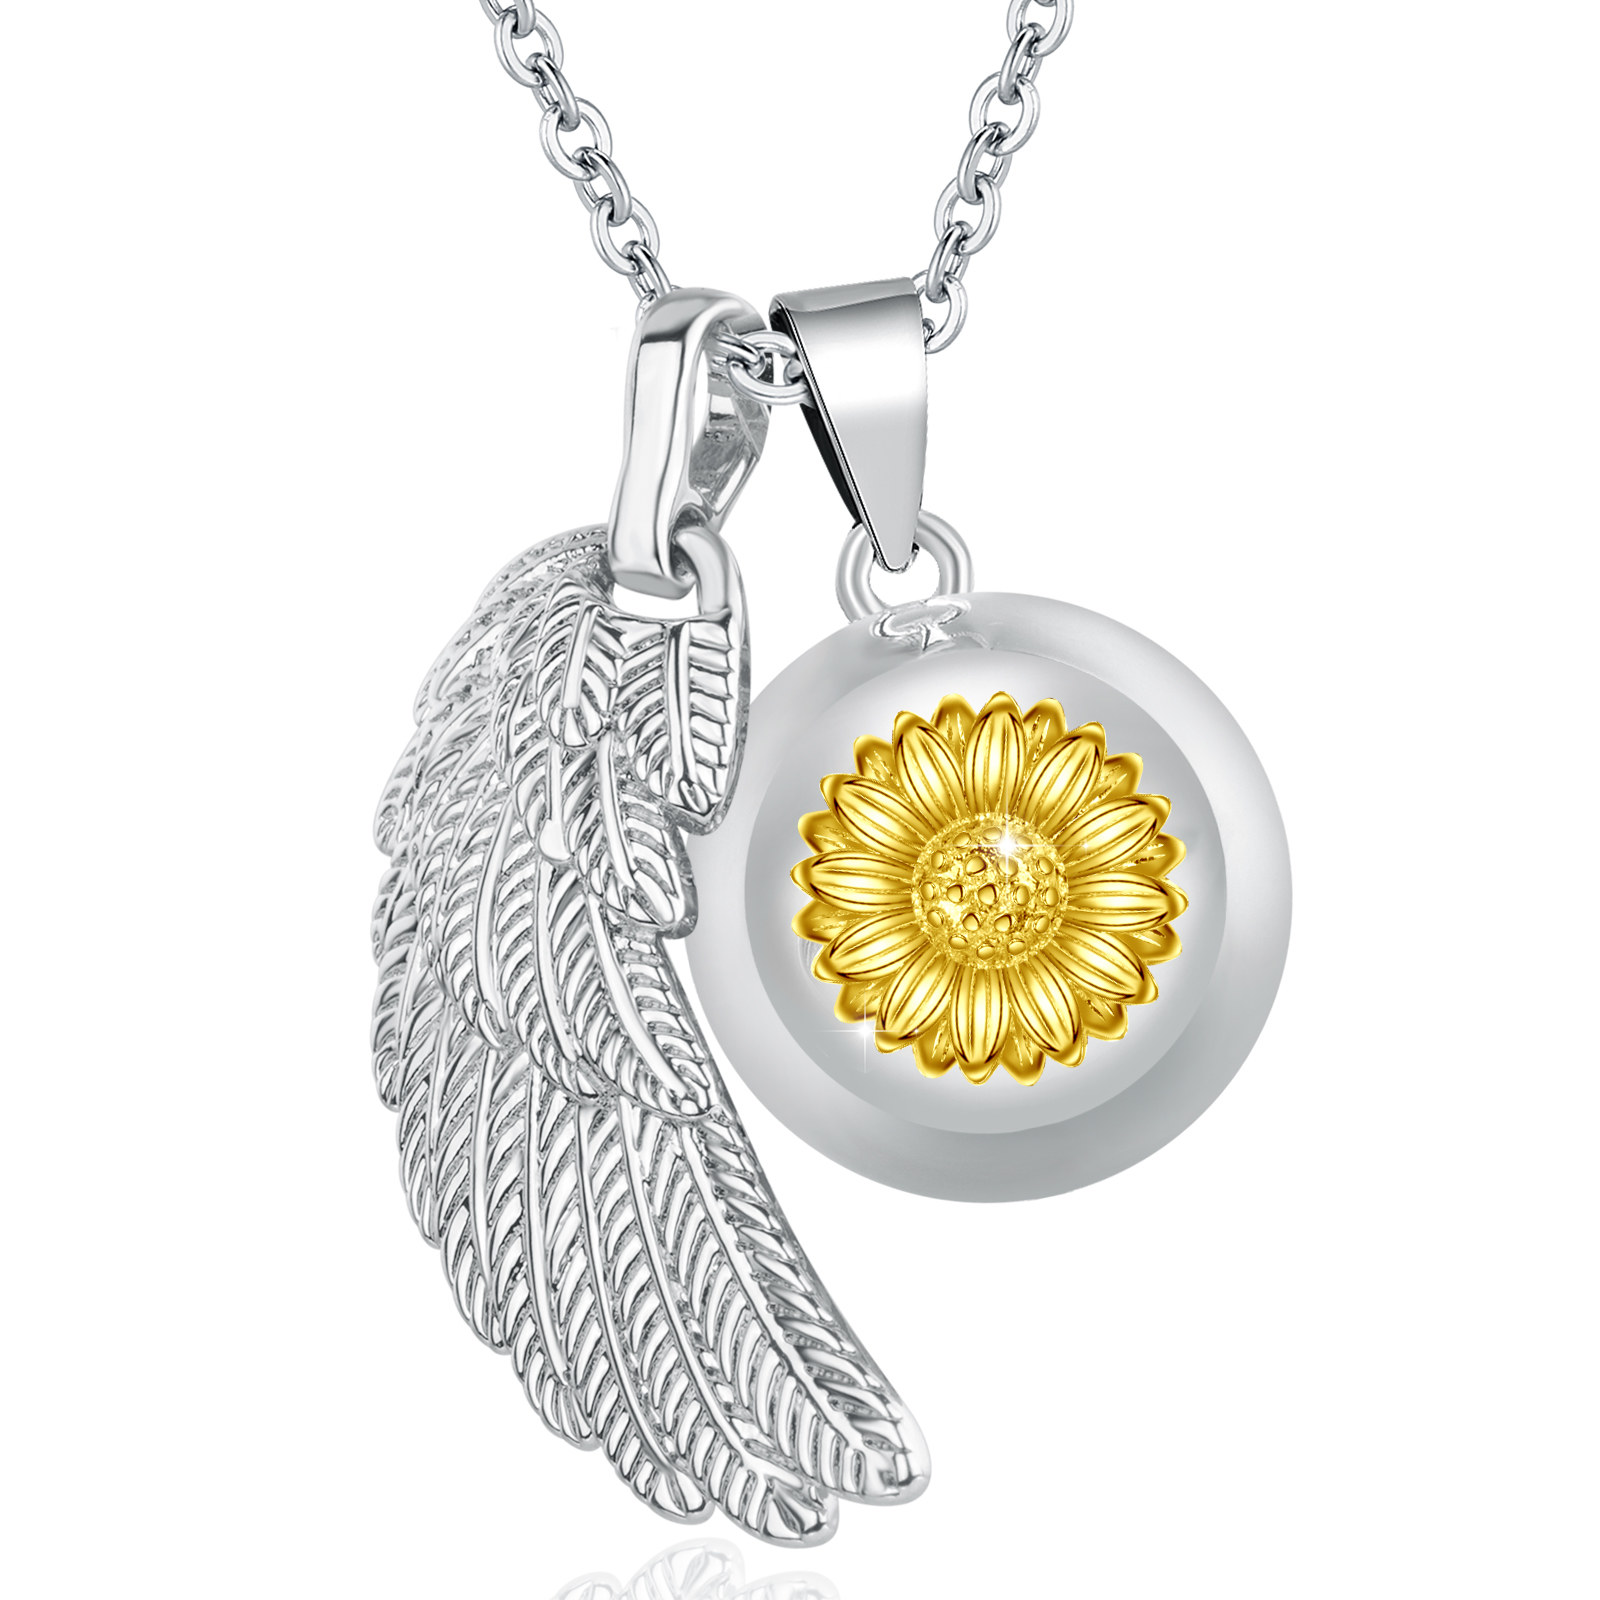 Merryshine Jewelry Sunflower Angel Caller Harmony Chime Ball Bell Pendant Necklace